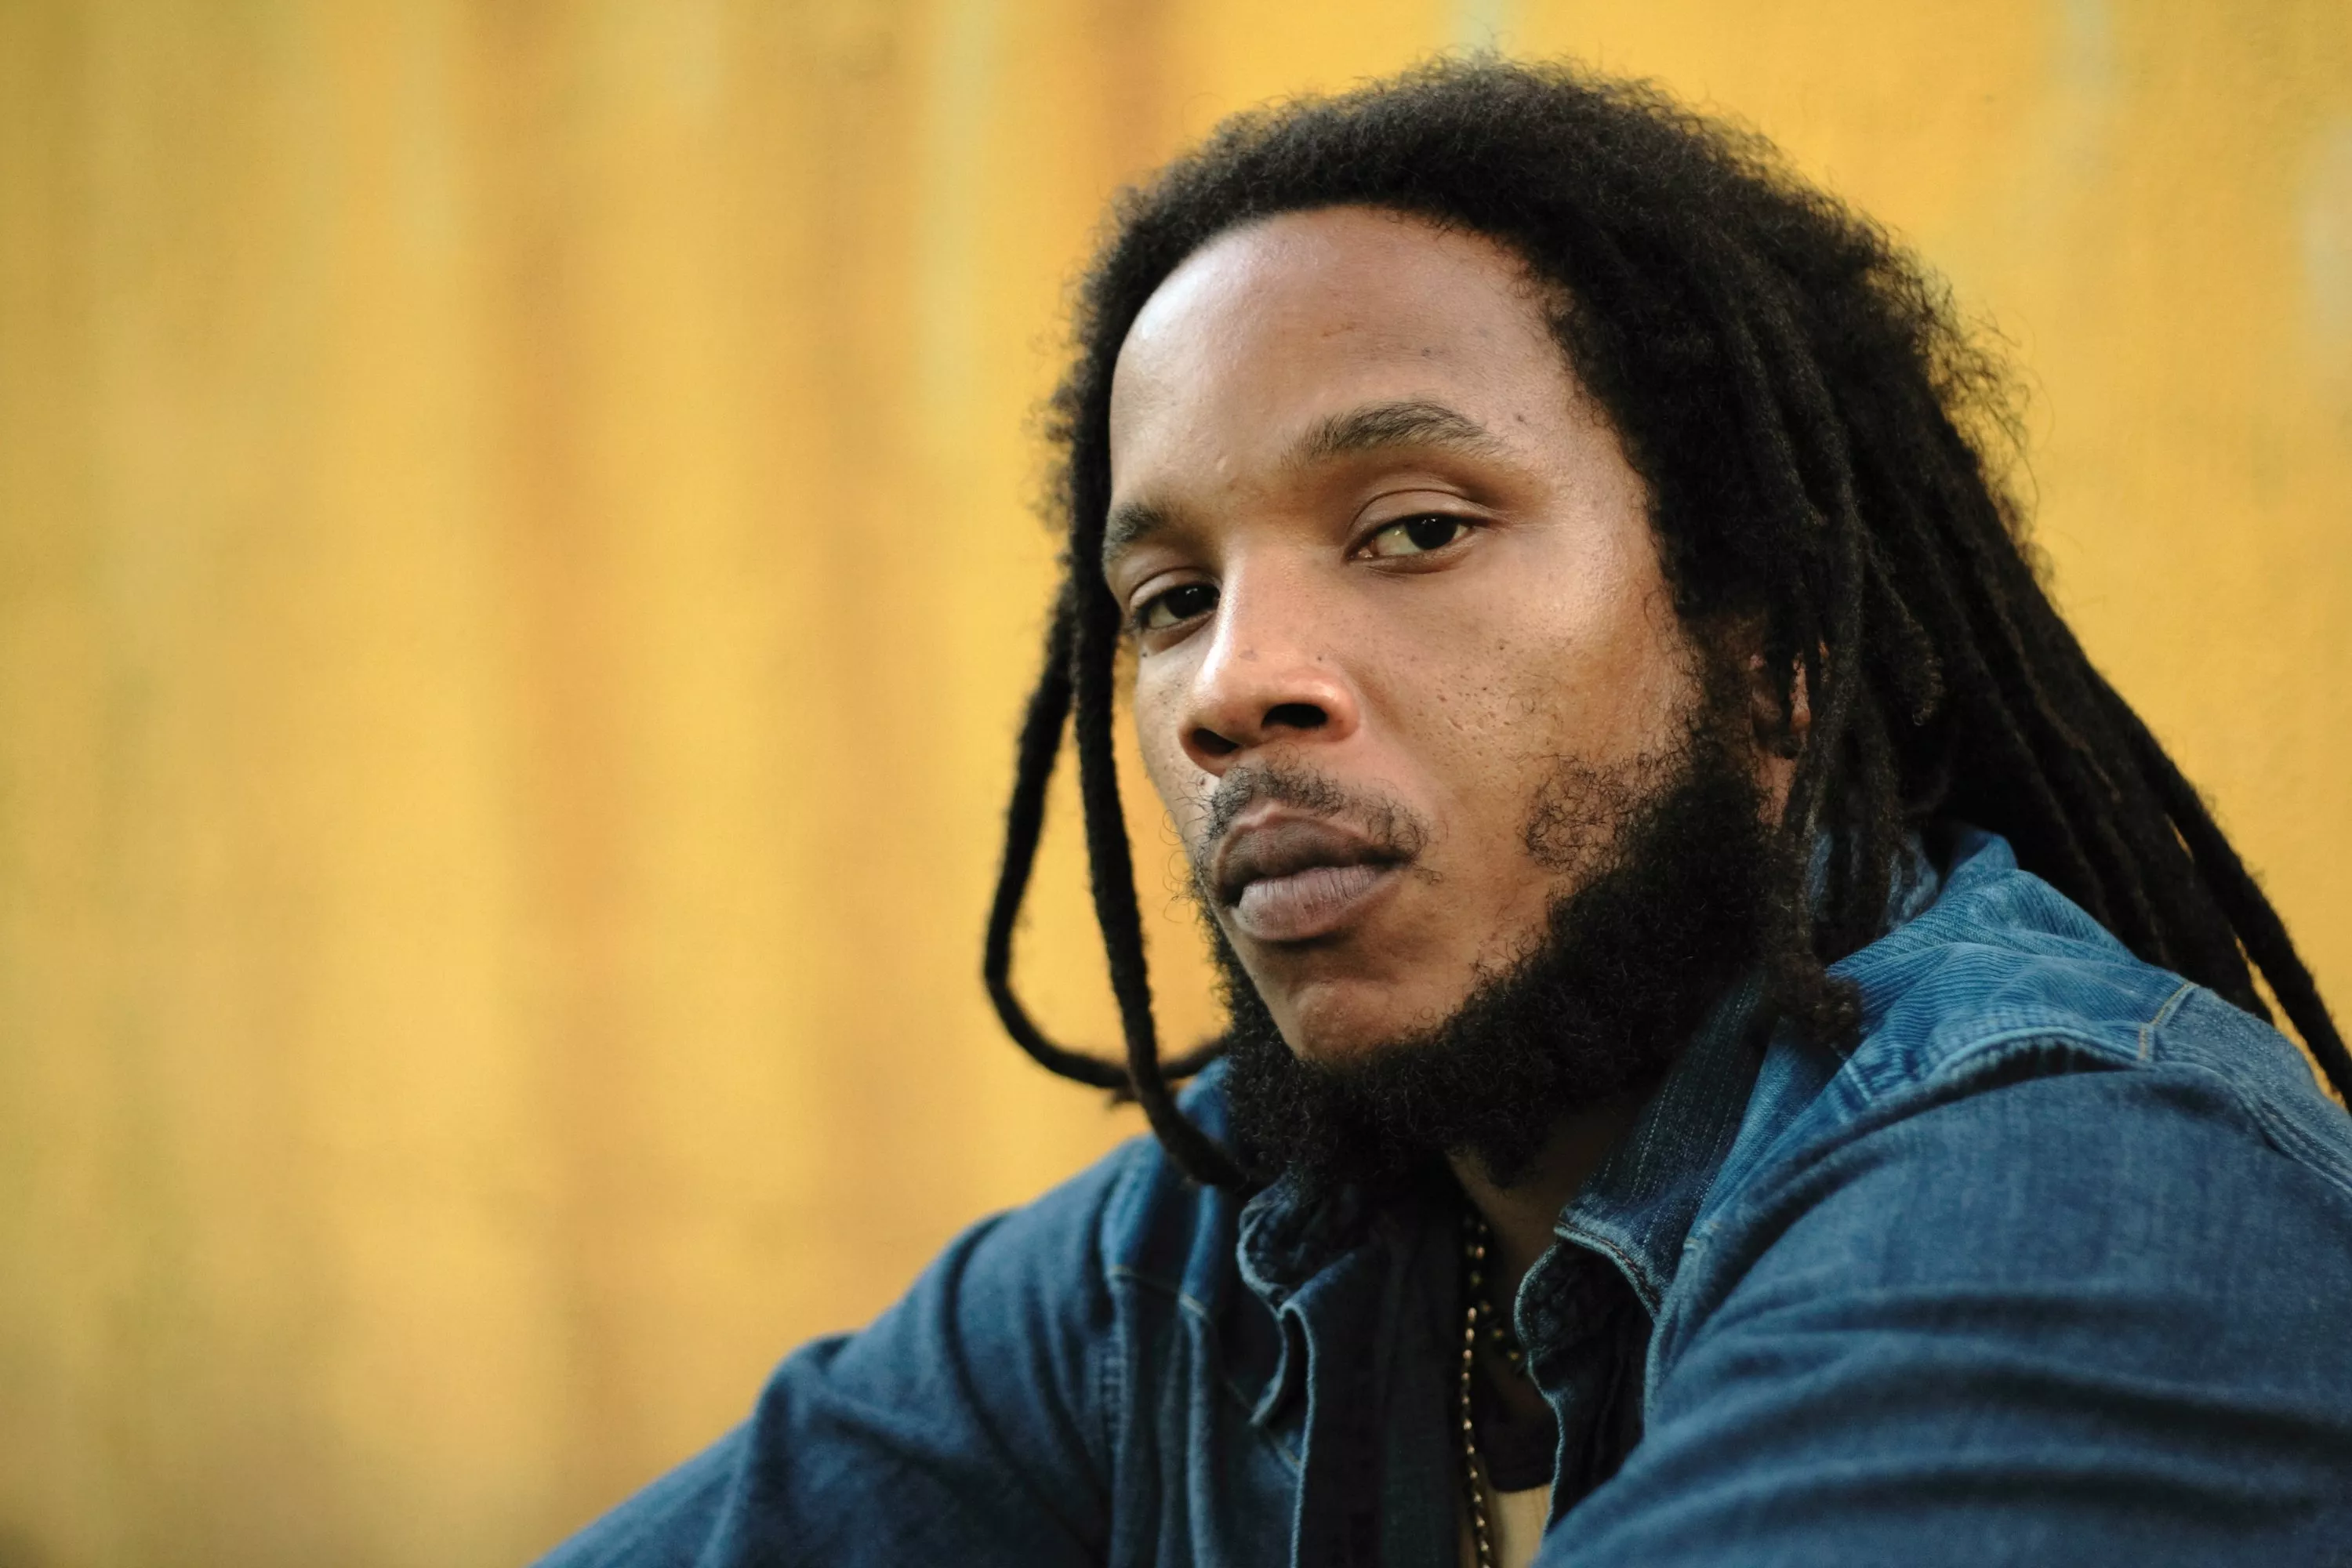 Stephen Marley – Soldier in Jah Army